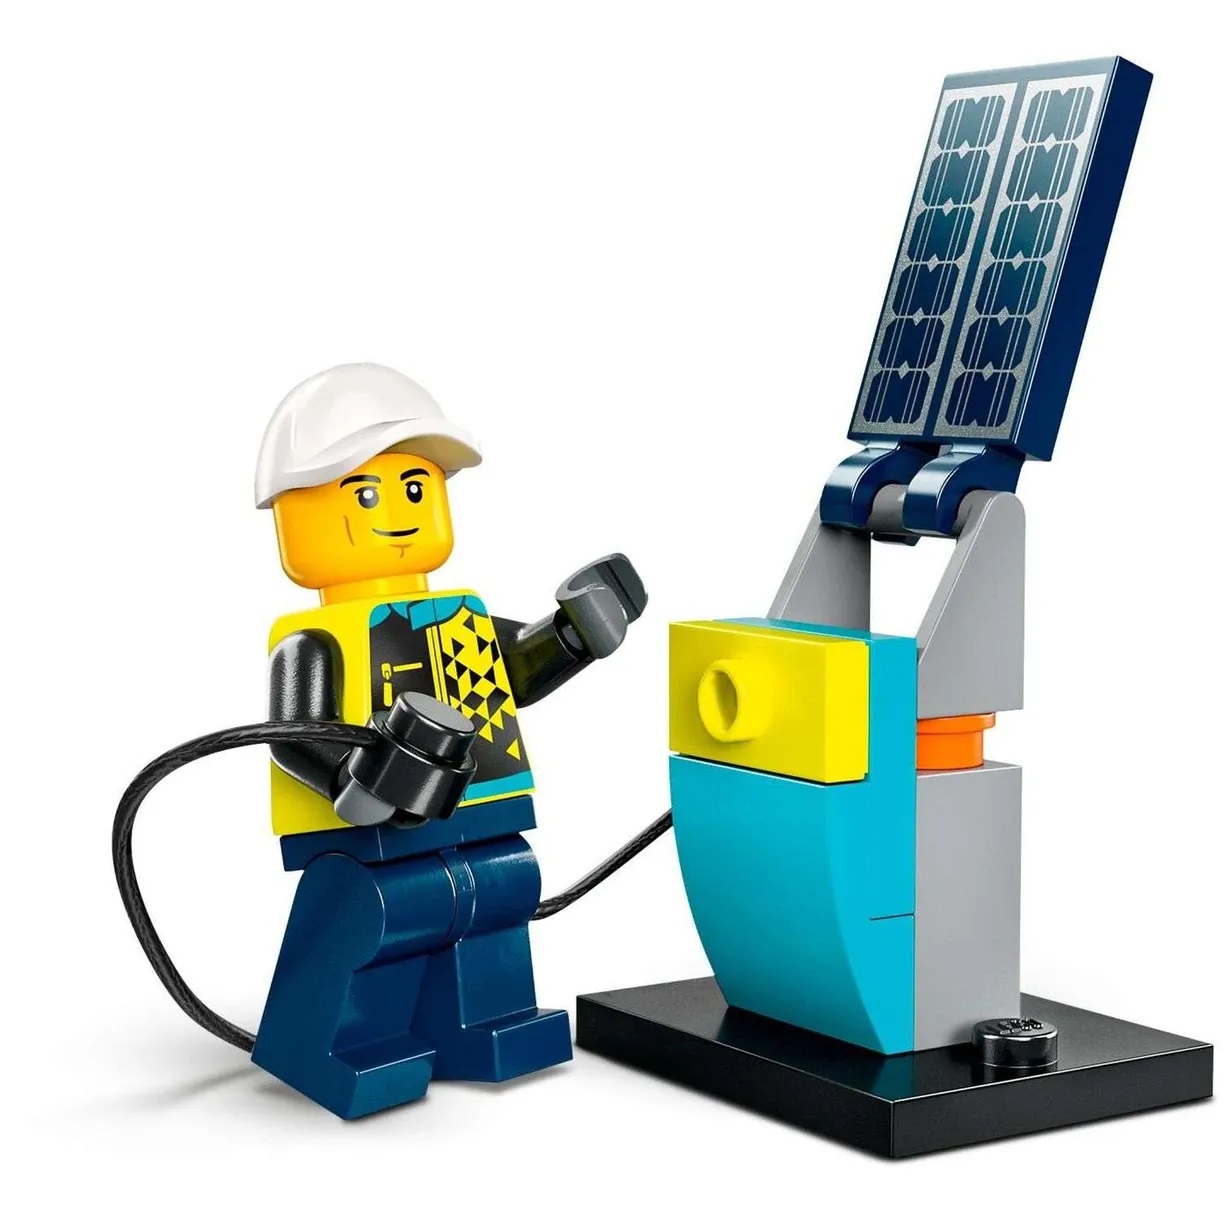 Lego City 60383 Электрический спорткар